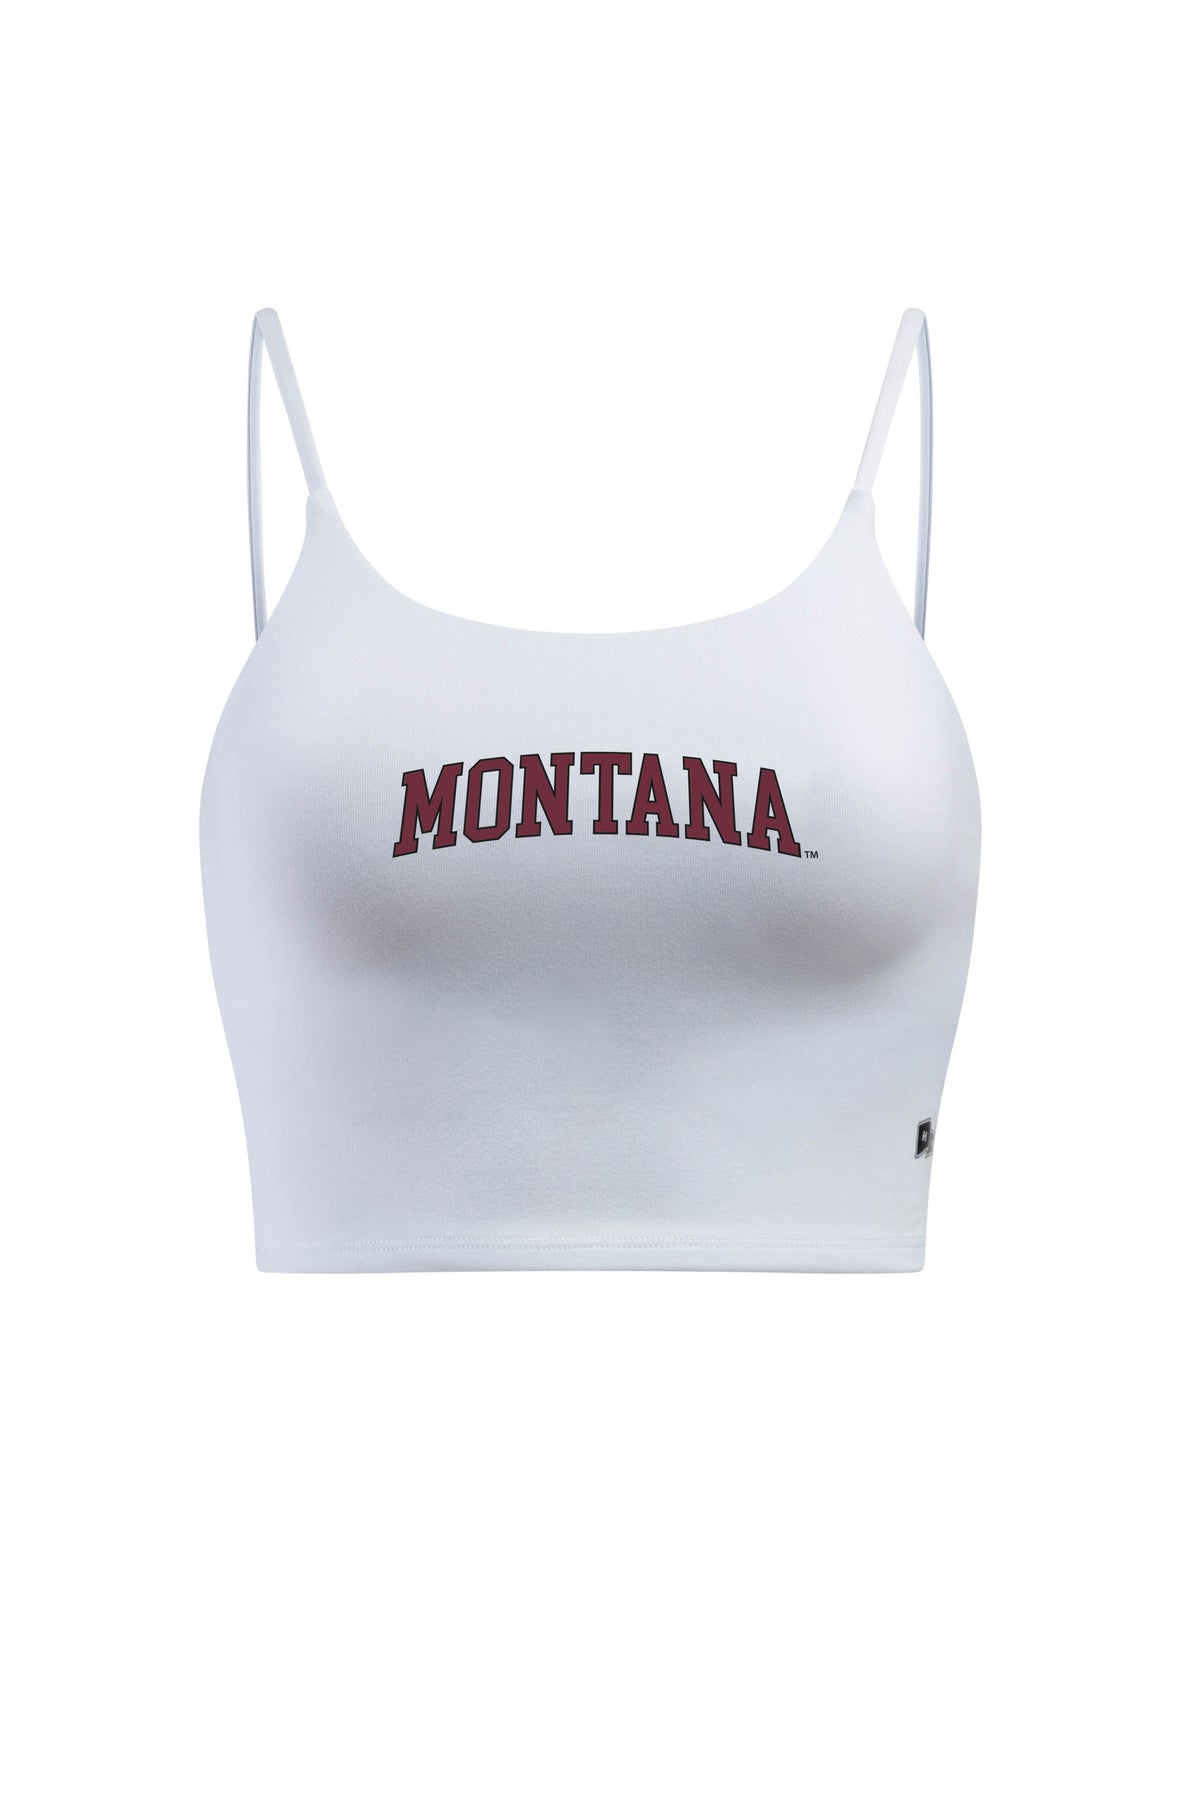 University of Montana Bra Tank Top